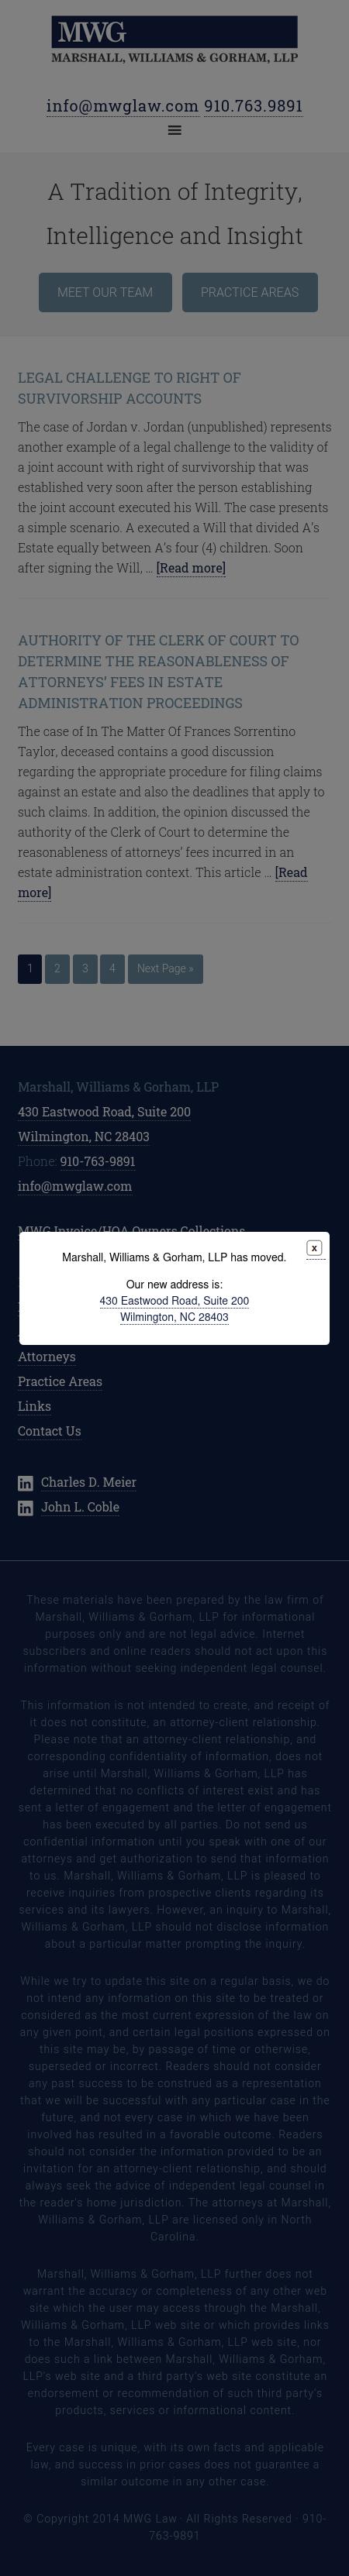 Marshall Williams & Gorham - Wilmington NC Lawyers